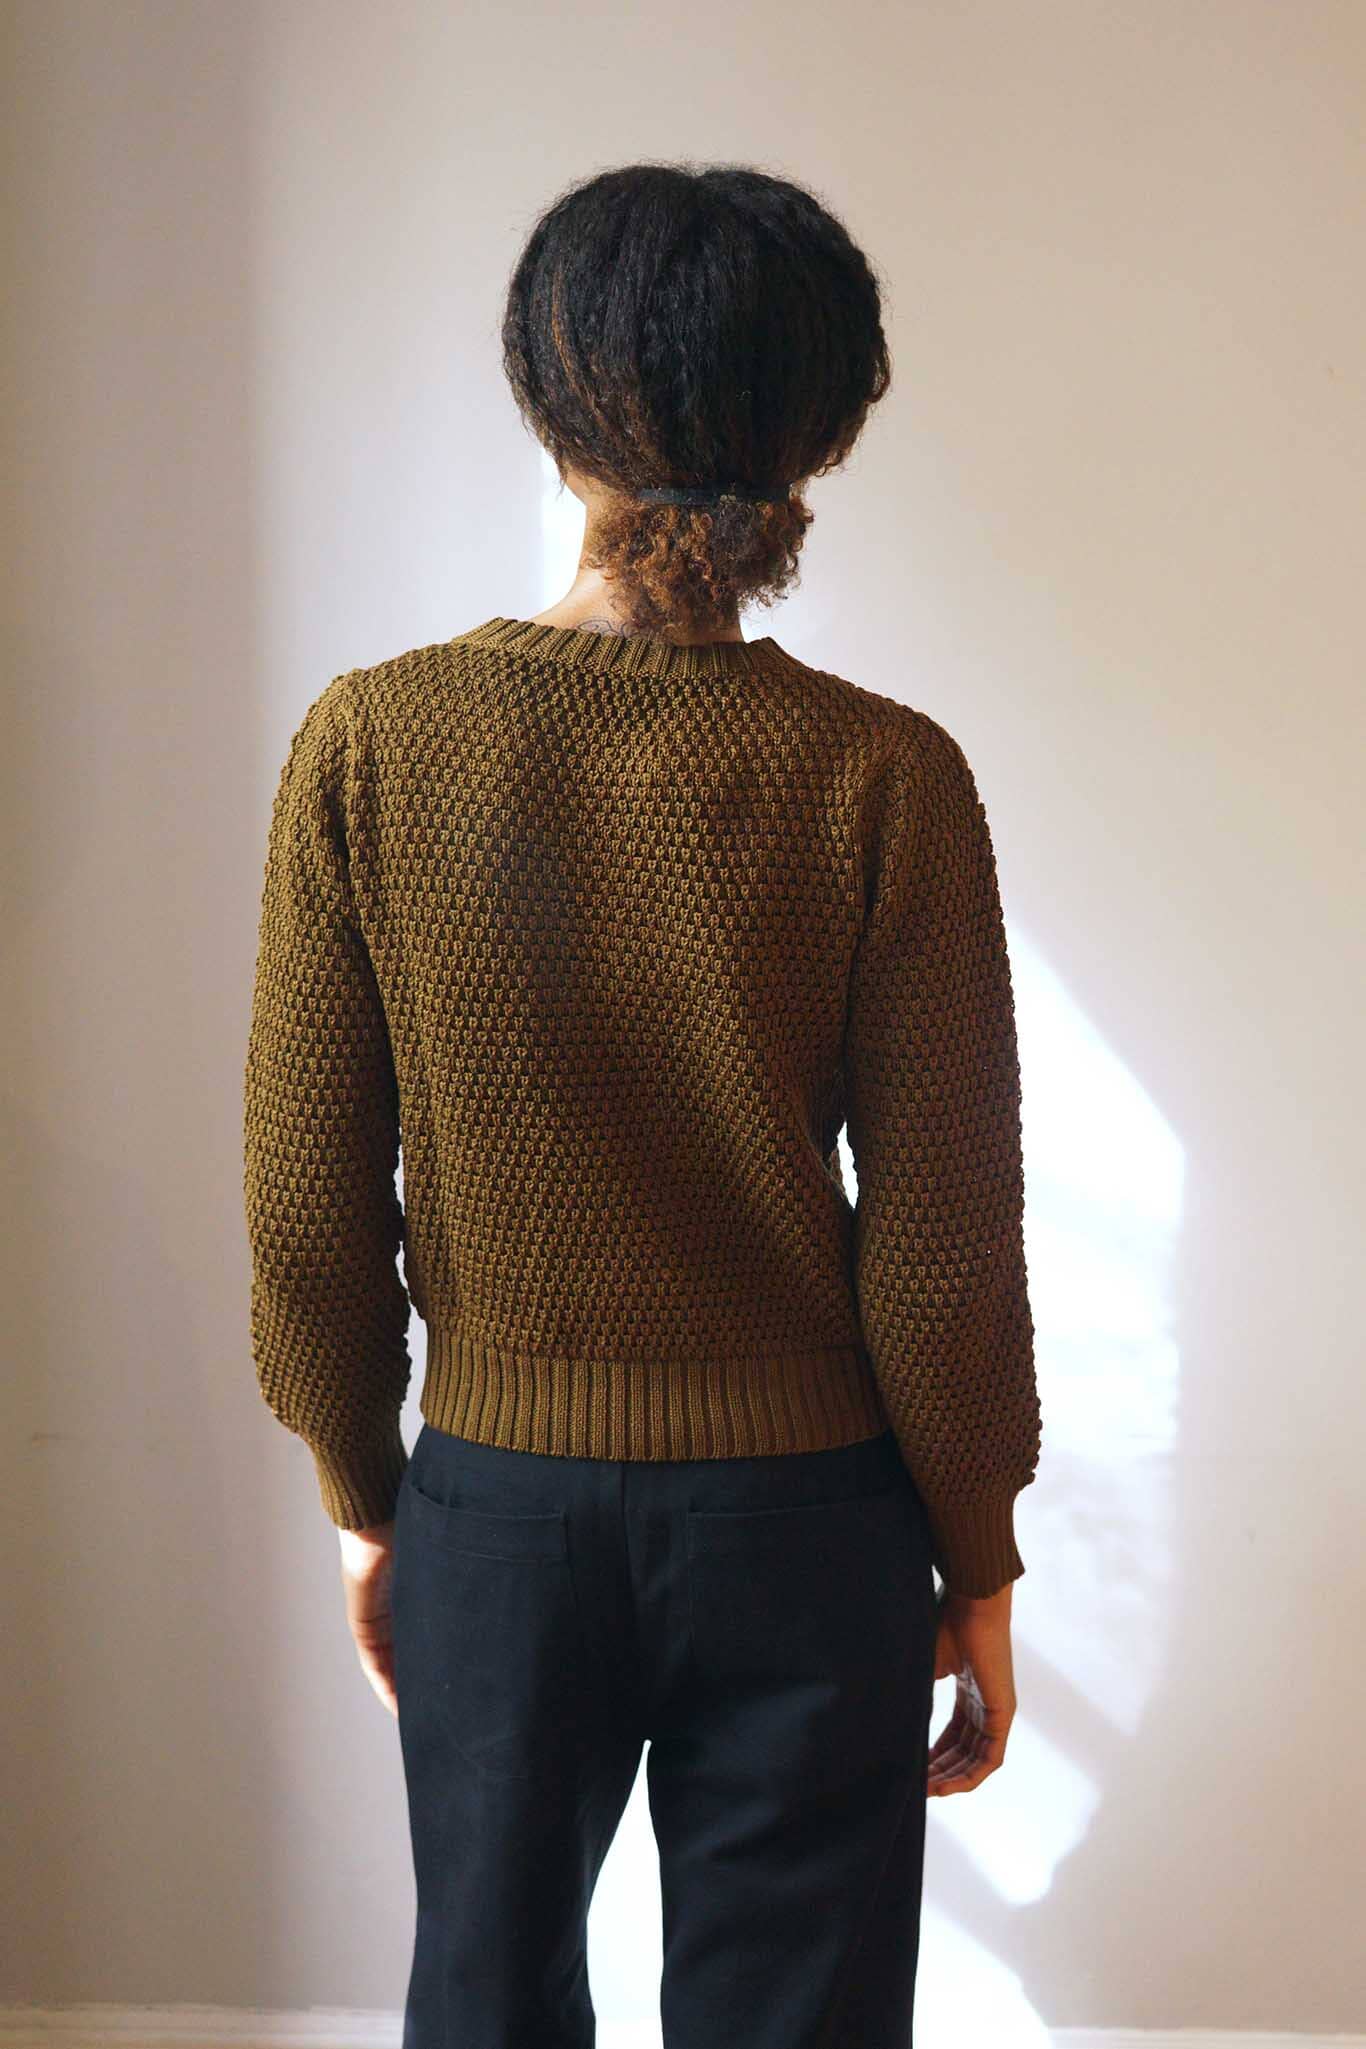 Textural cotton knit crewneck sweater. Made in peru.